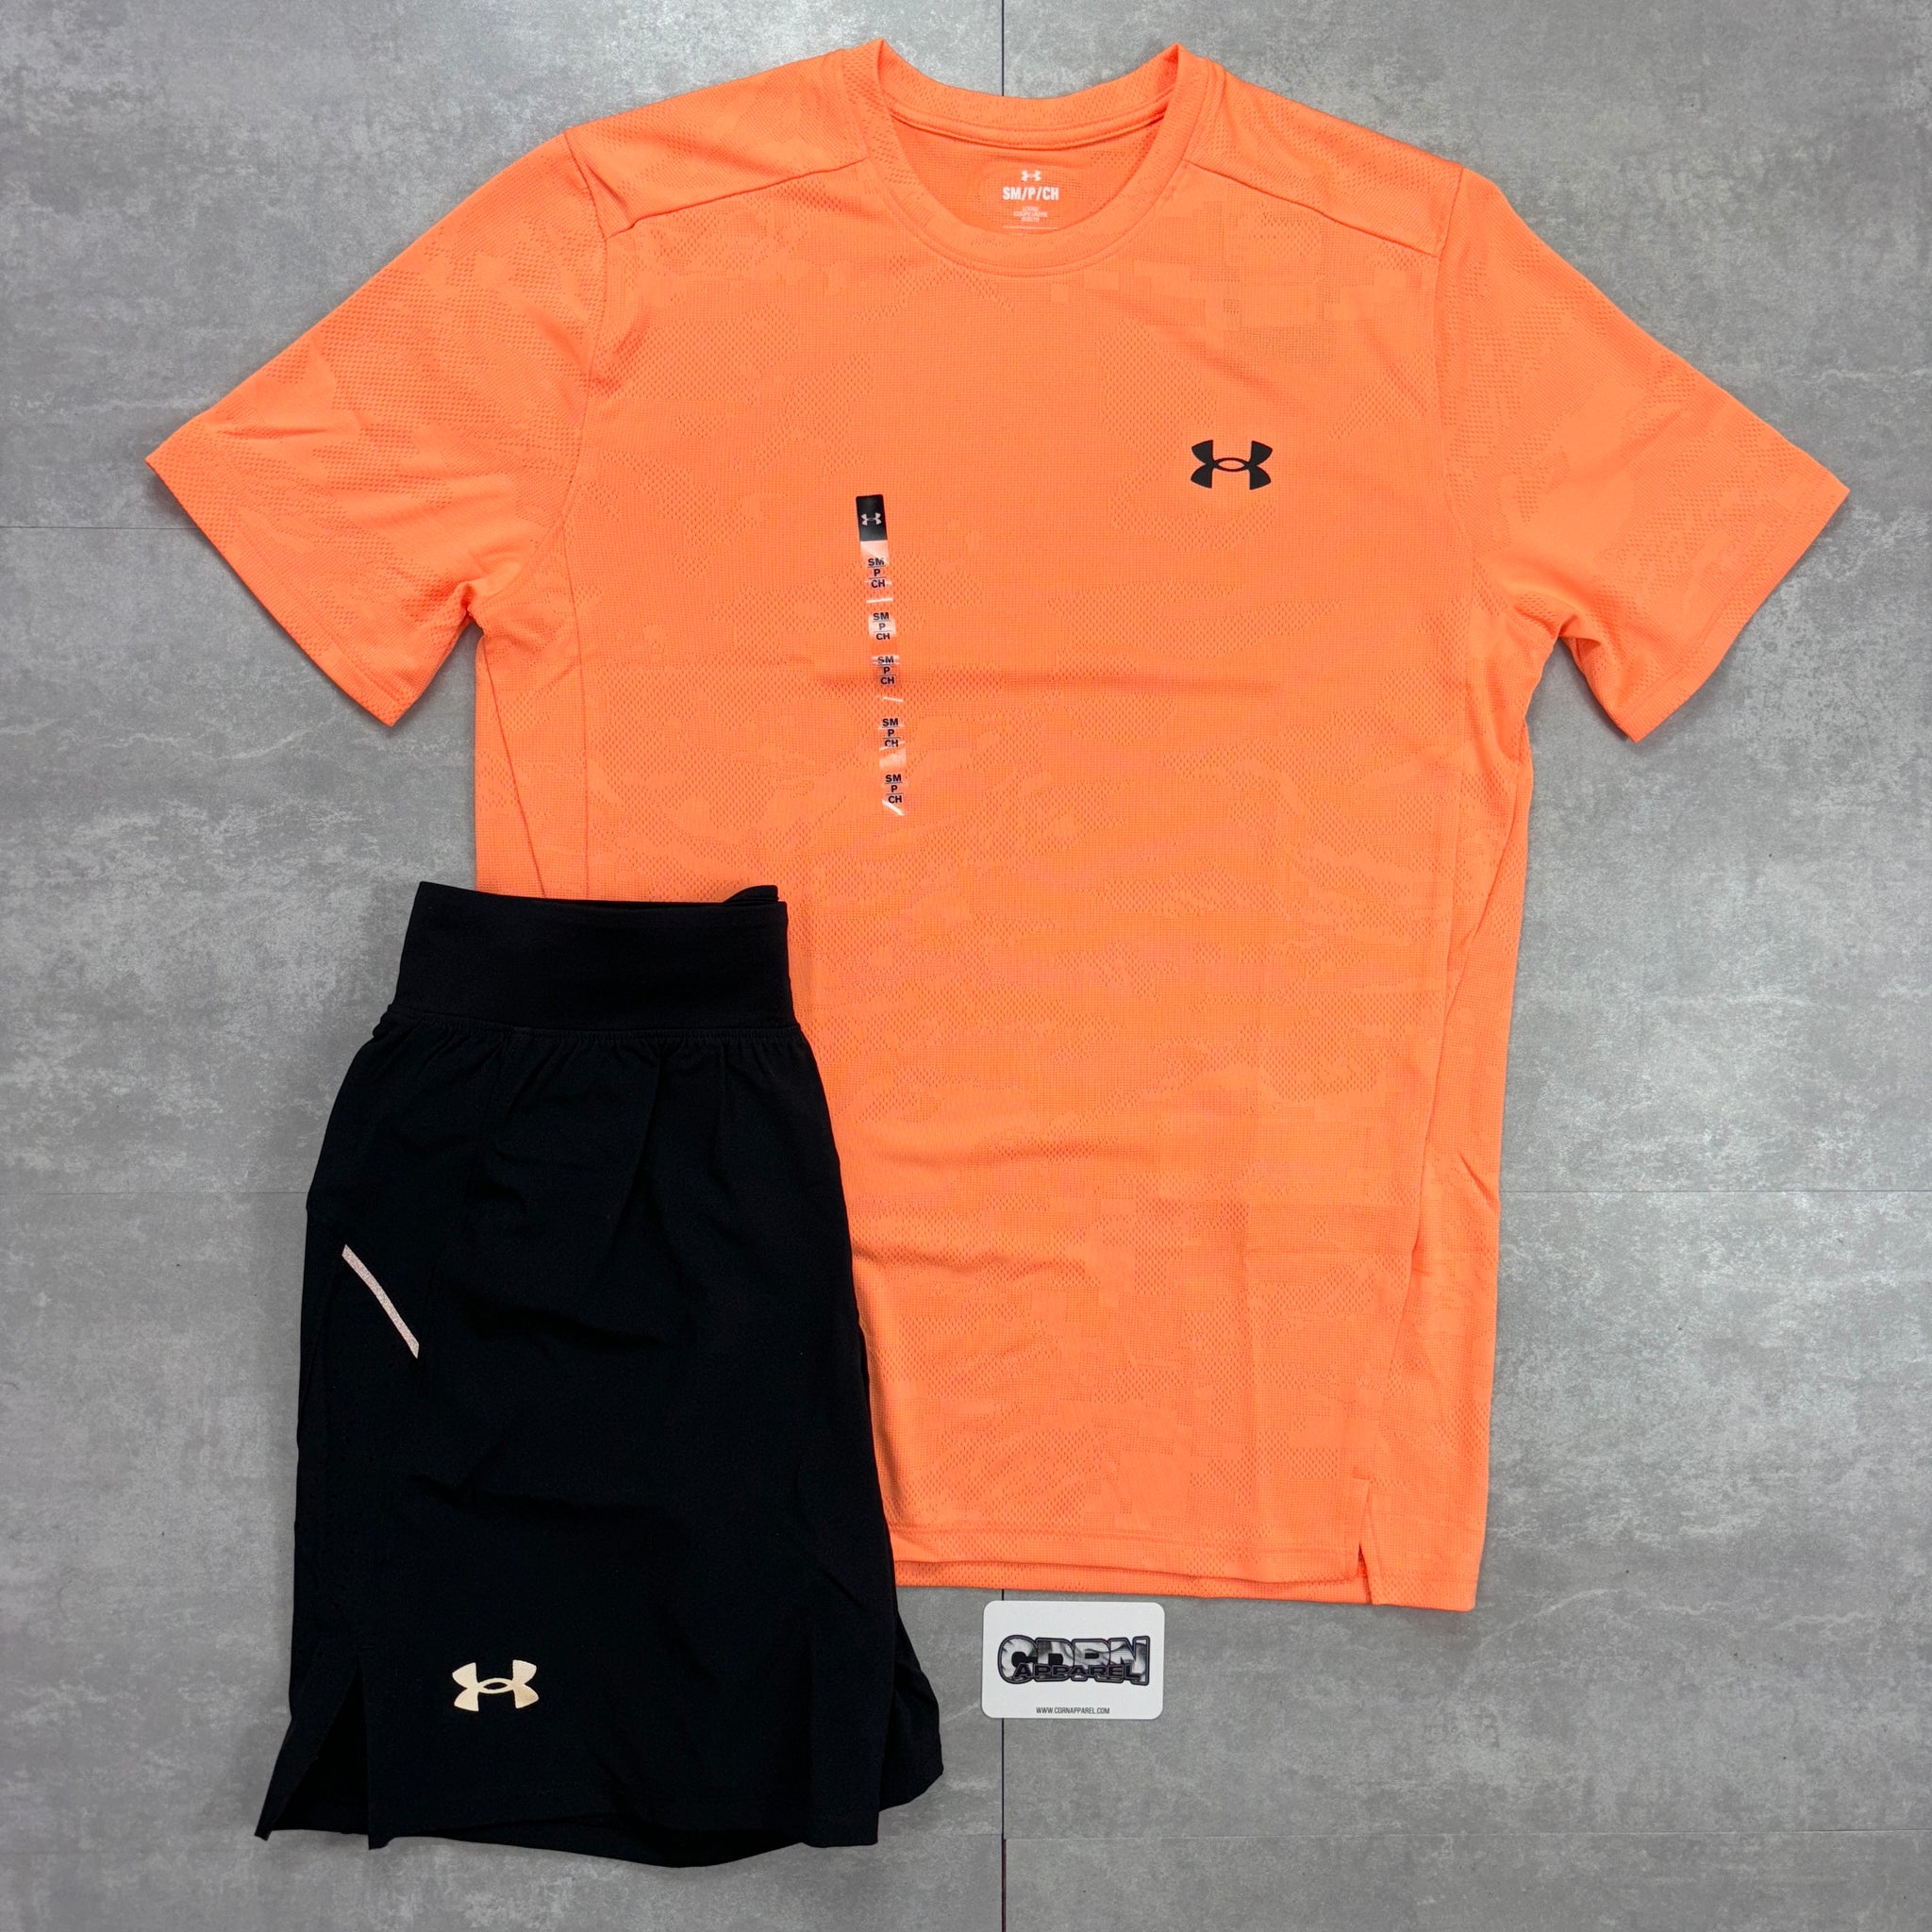 Under Armour Orange Jacquard Print T-Shirt & 7” Black Speed Shorts